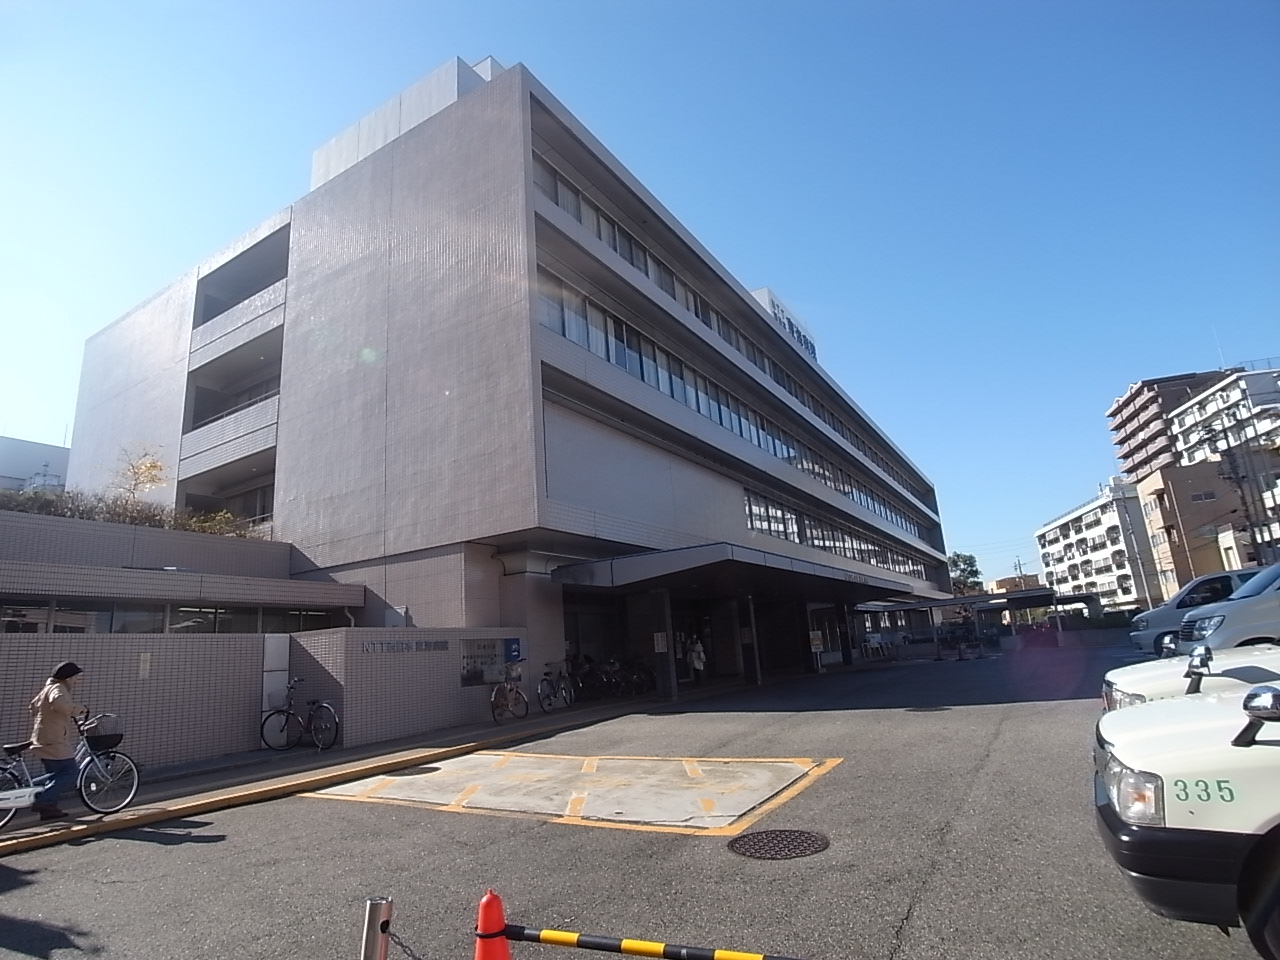 Hospital. NTT West Tokai hospital 960m (General Hospital) to (hospital)